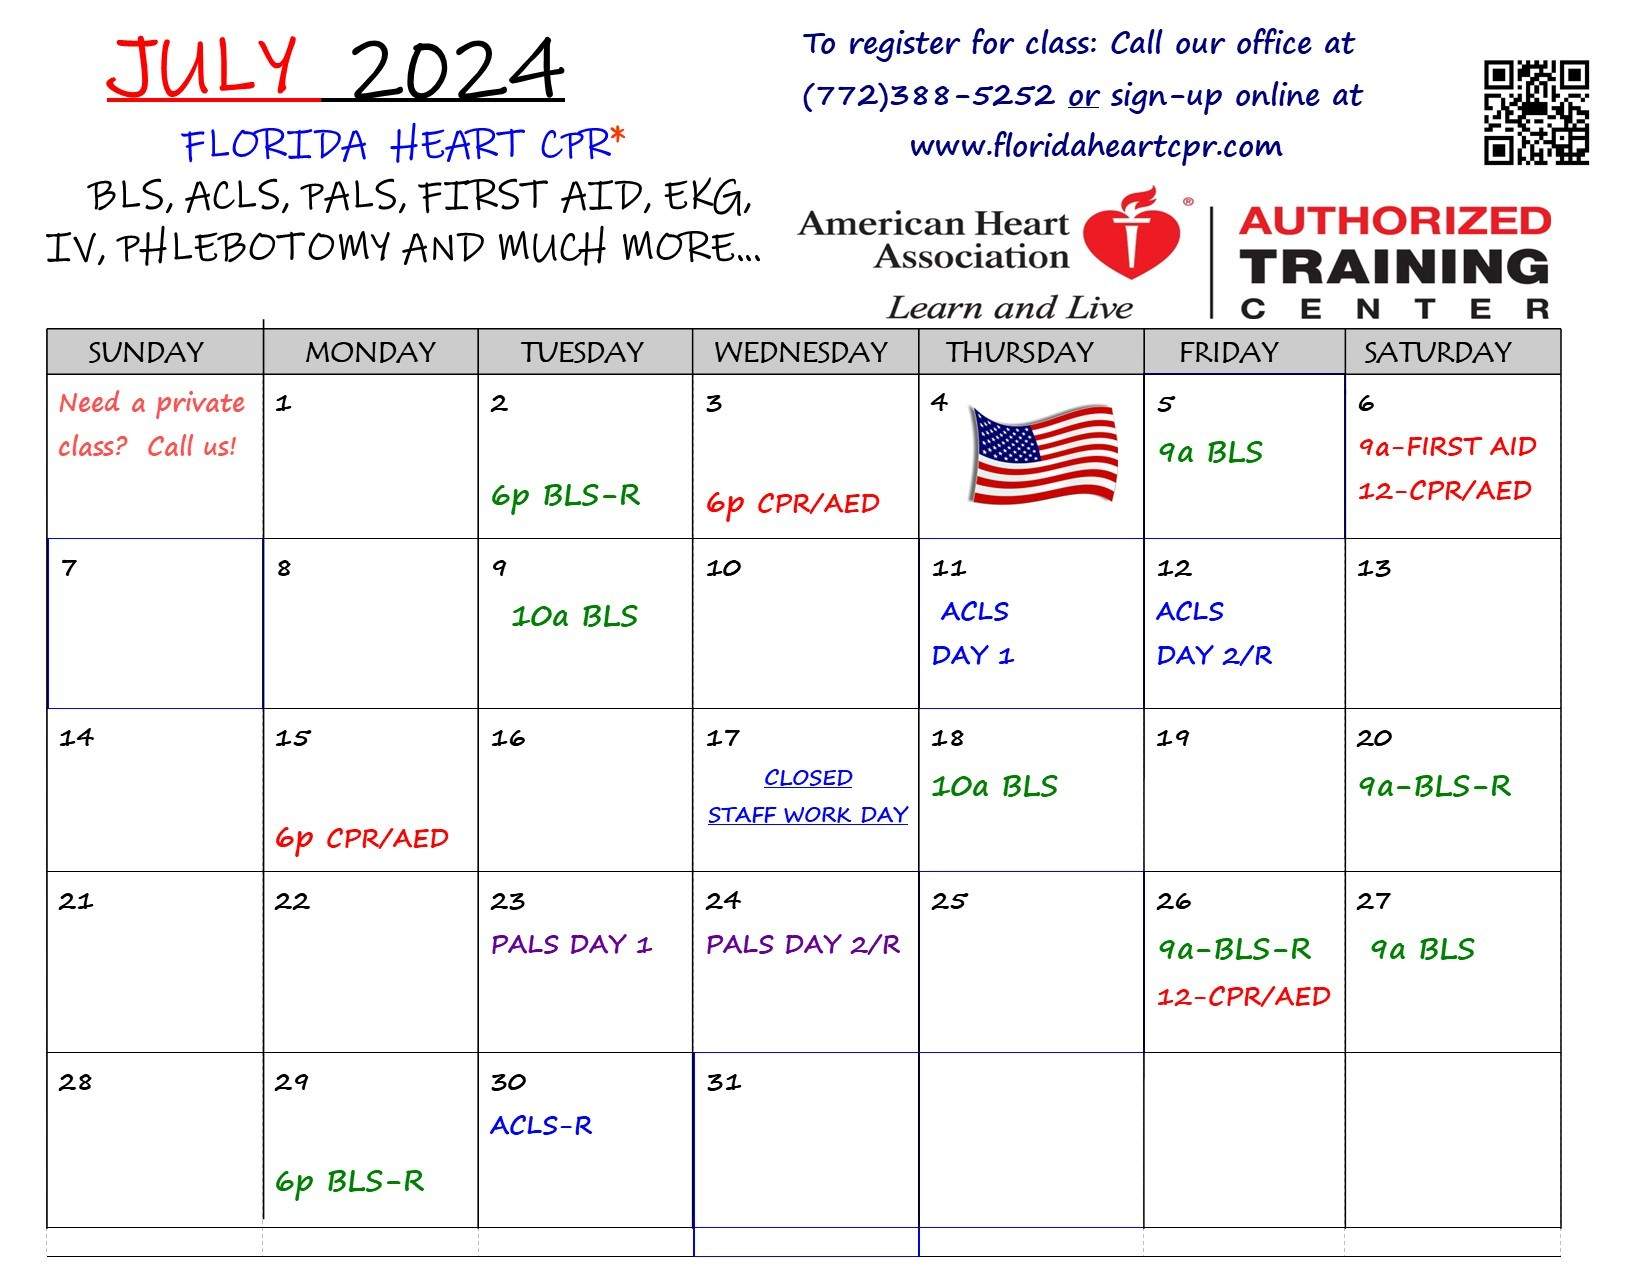 JULY 2024 Calendar